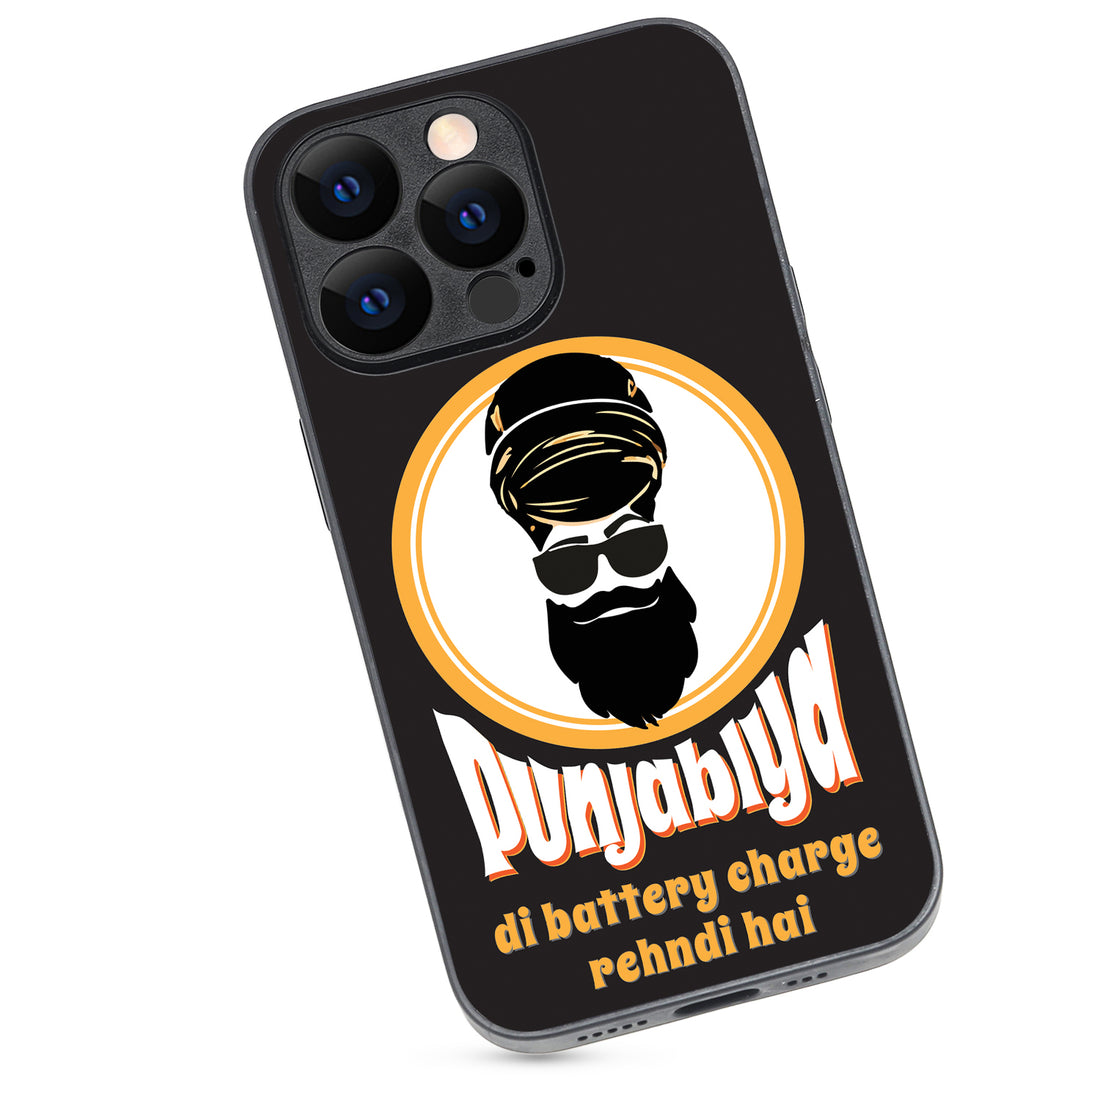 Punjabiyan Di Battery Masculine iPhone 13 Pro Case